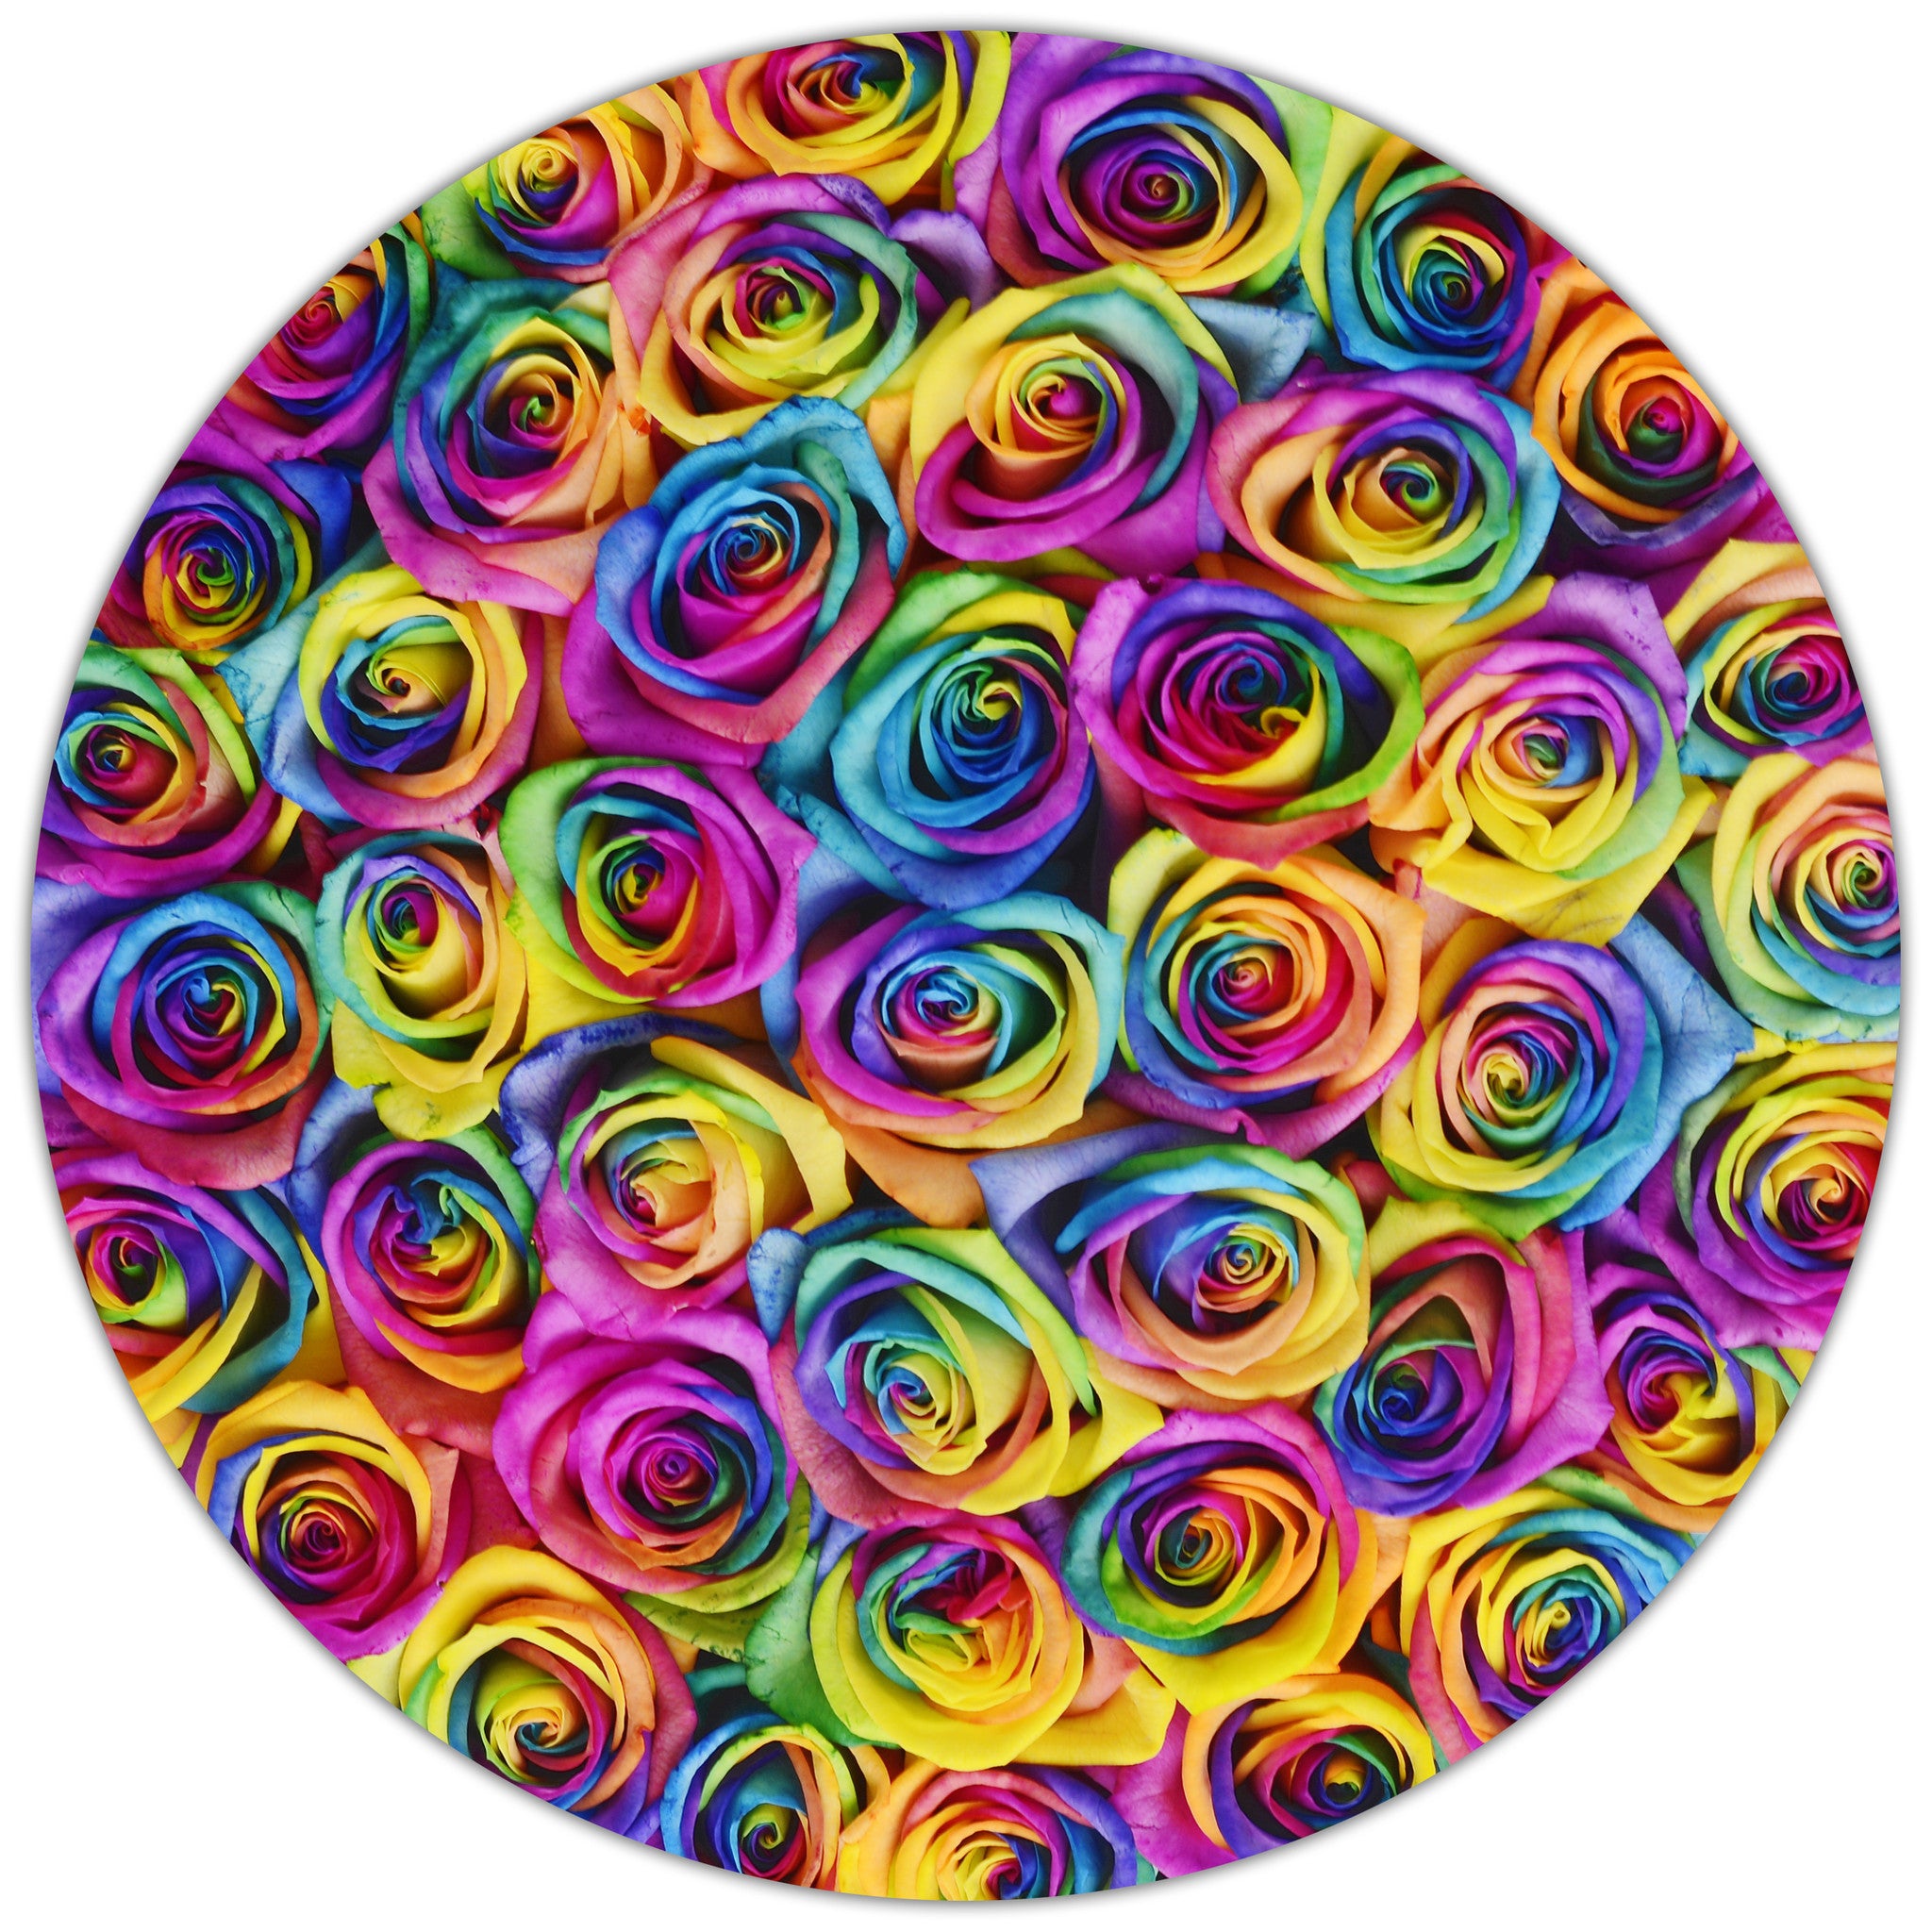 Cube - Rainbow Roses - White Box - The Million Roses Budapest